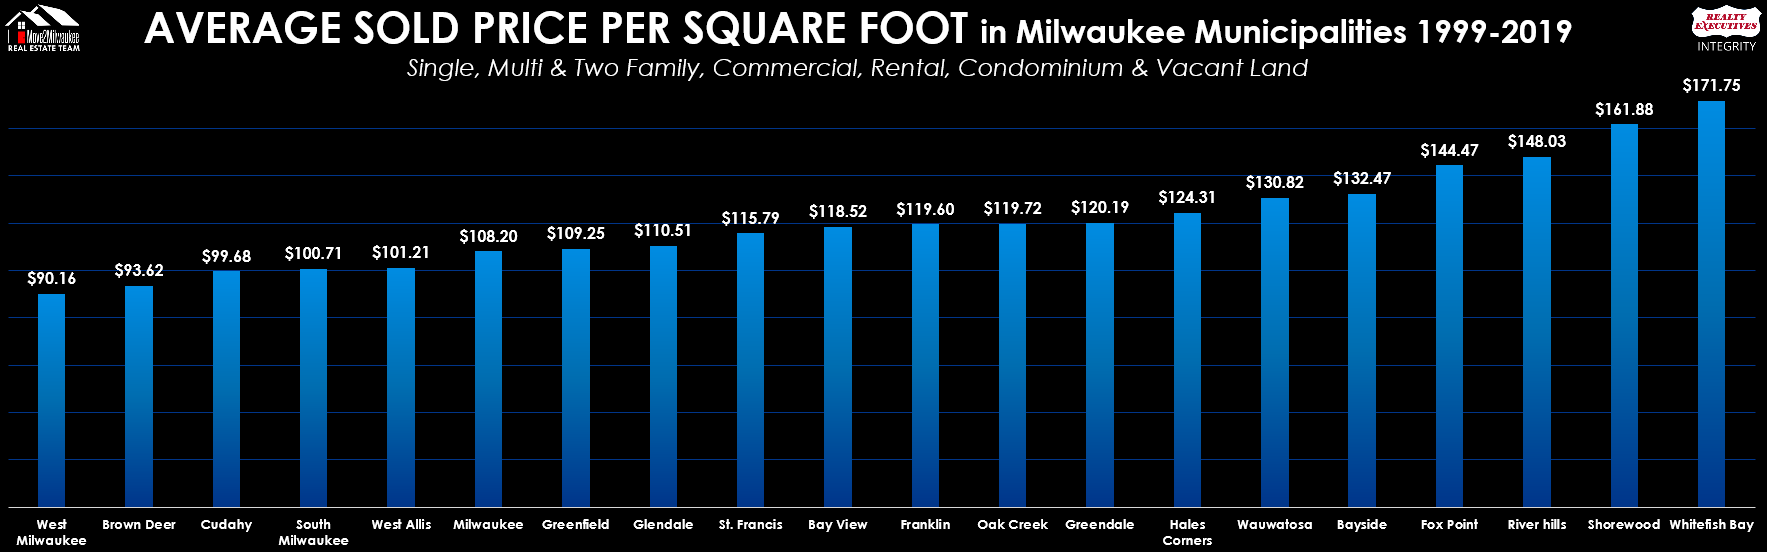 Average Sold Price Per Square Foot Milwaukee